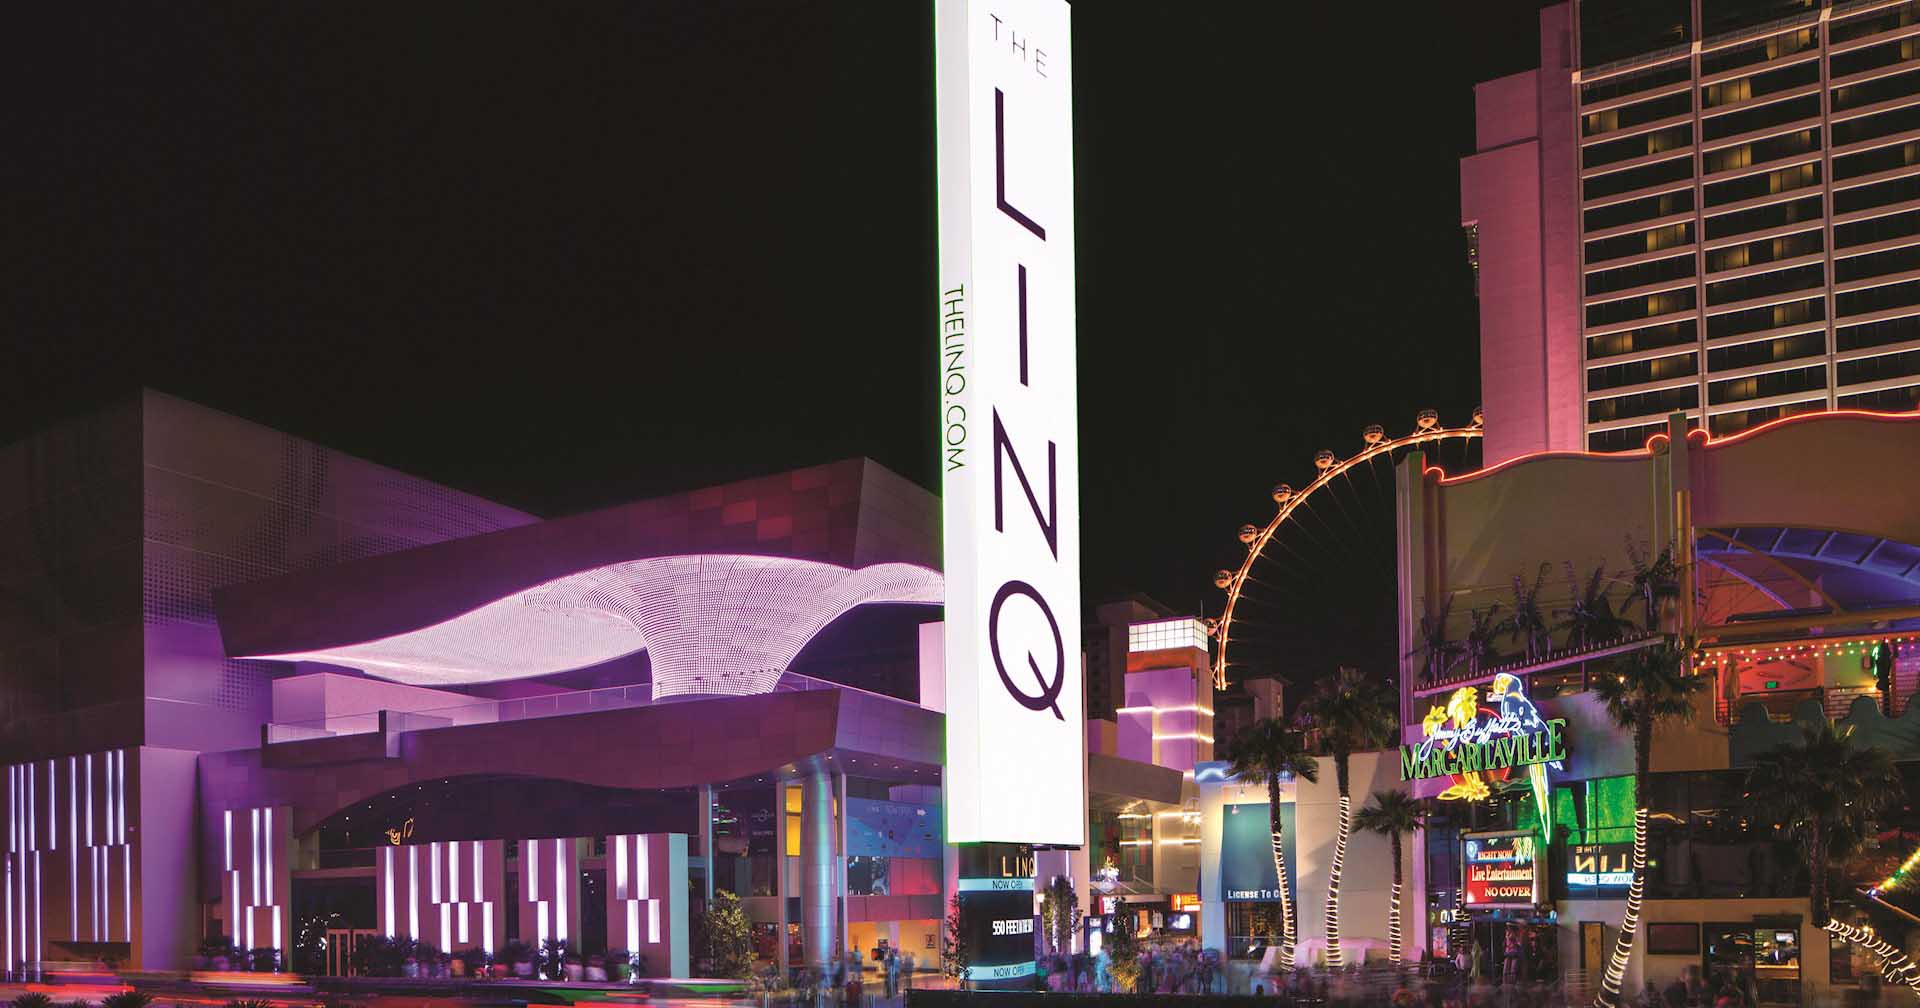 LINQ Las Vegas Hotels - Budget option on the Strip